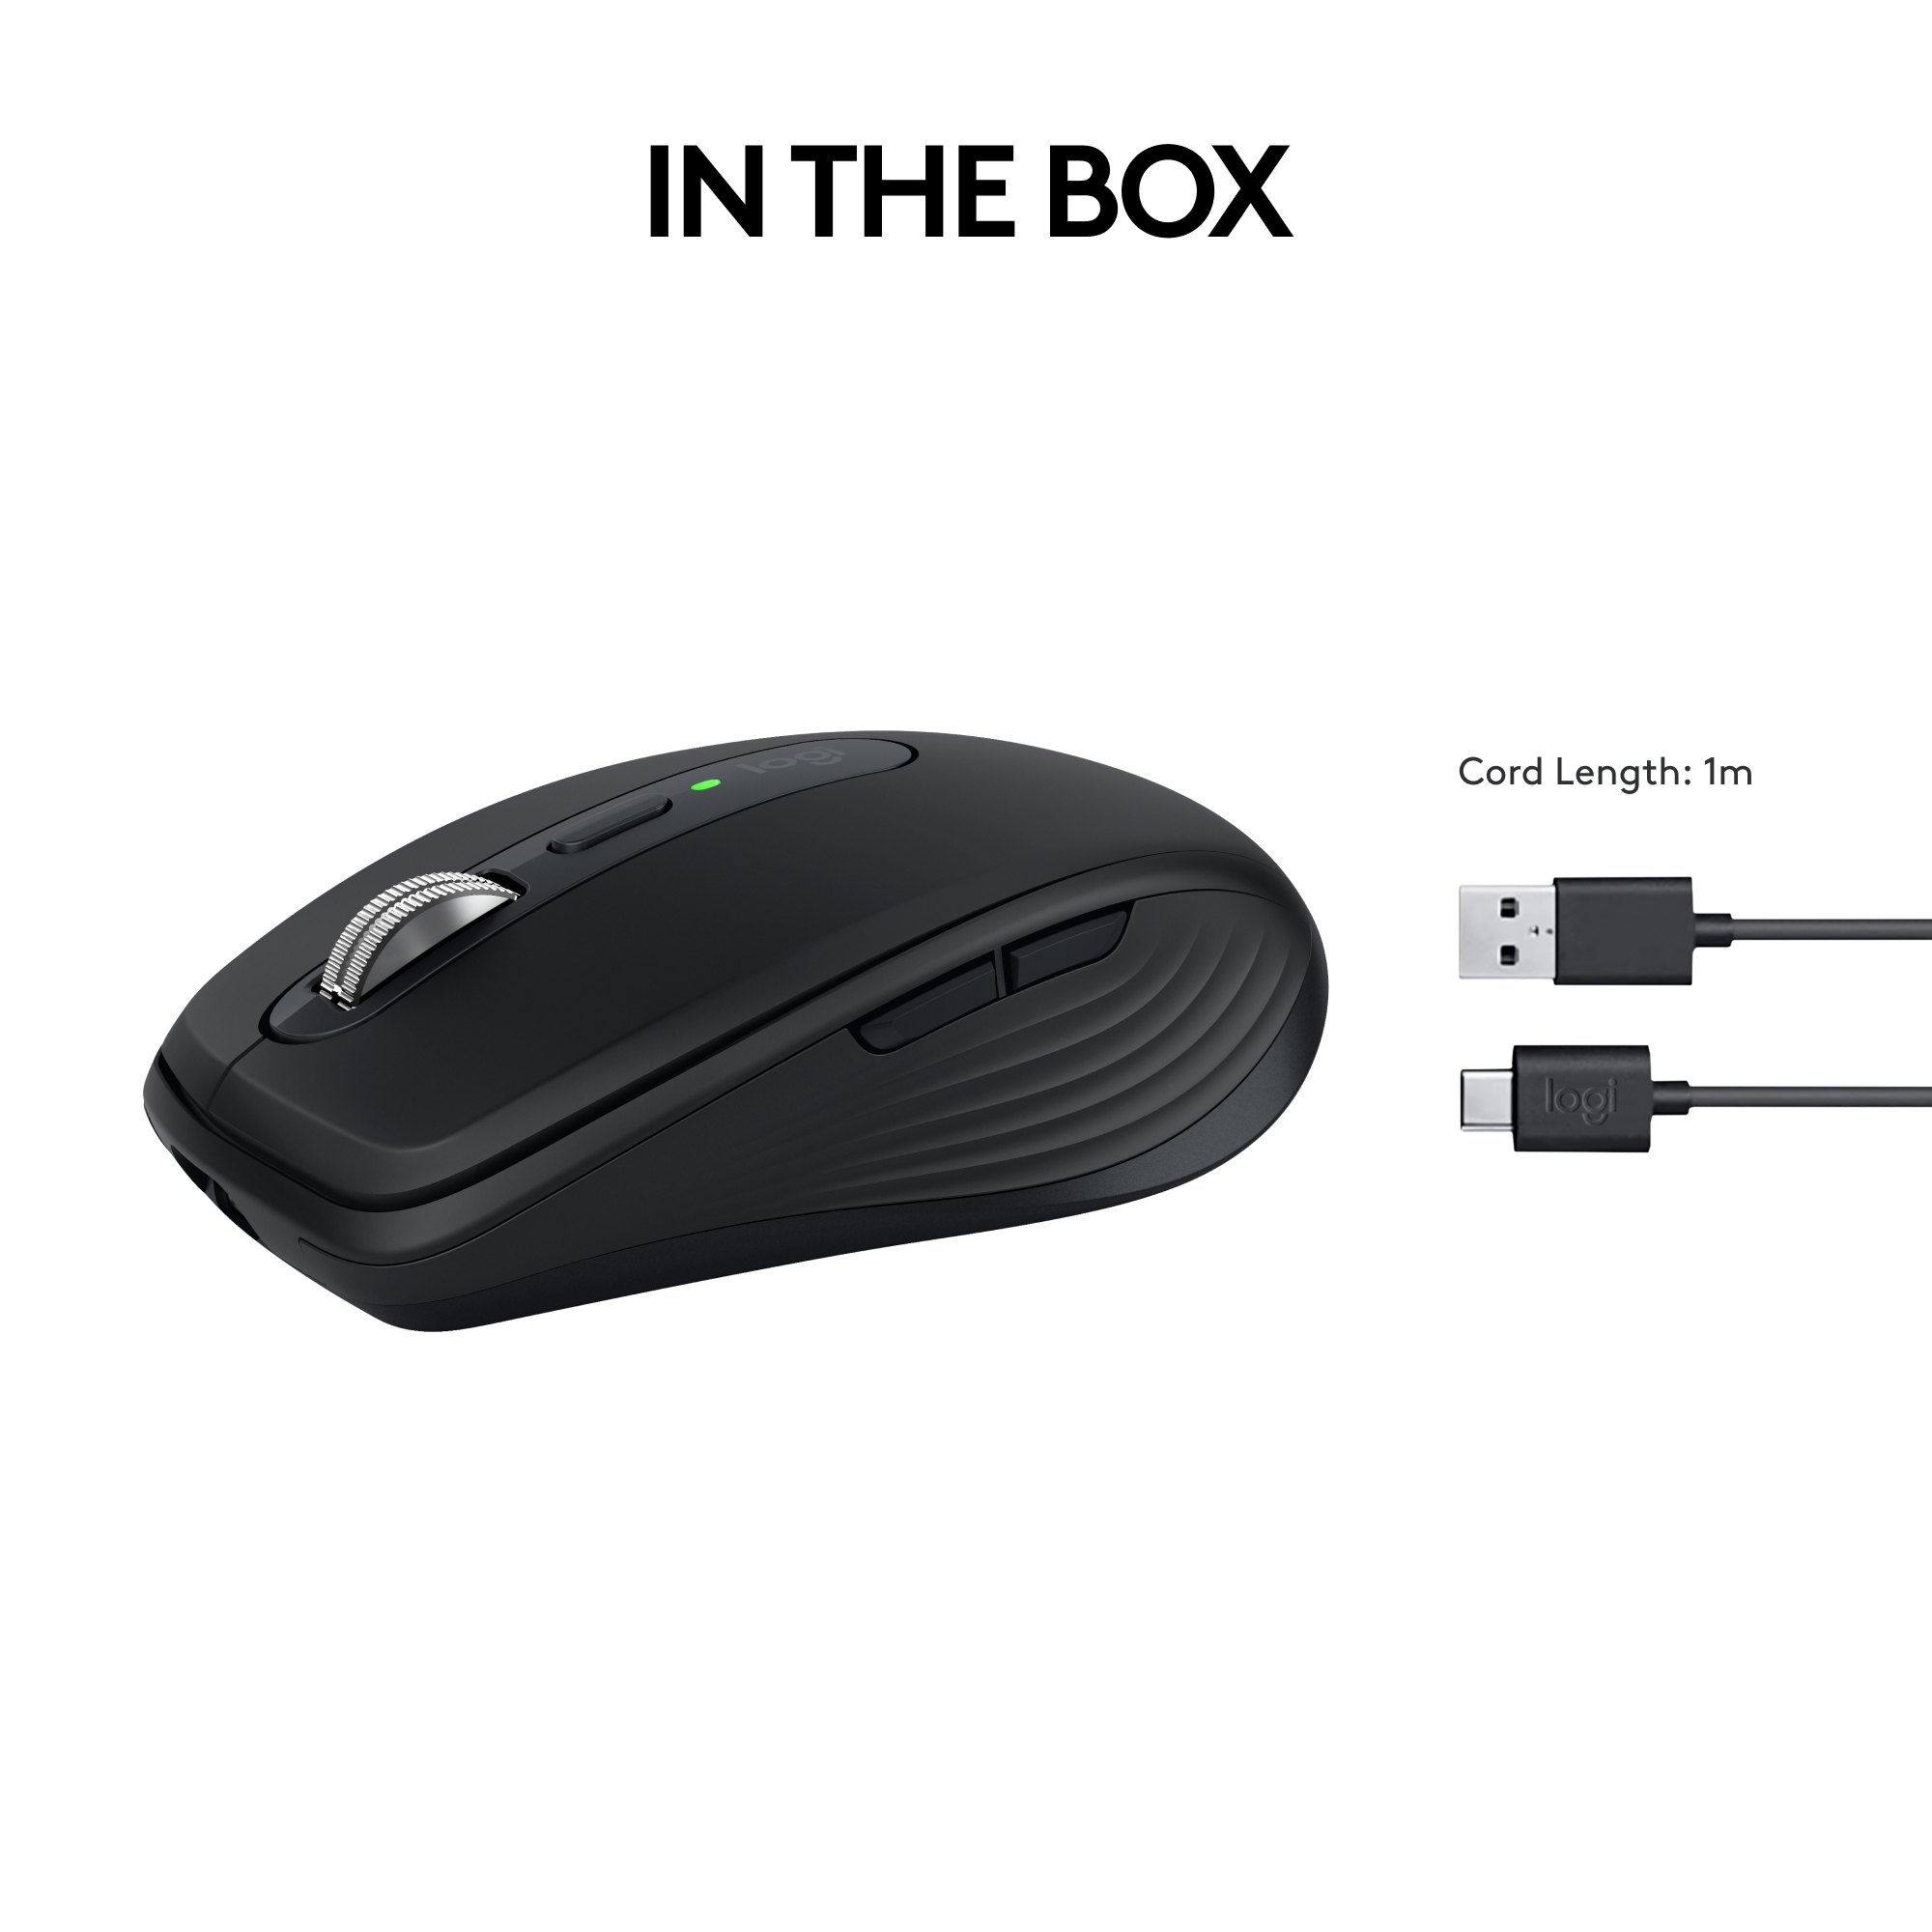 Mouse Logitech MX ANYWHERE 3S Wireless Bluetooth Graphite - Mesajil